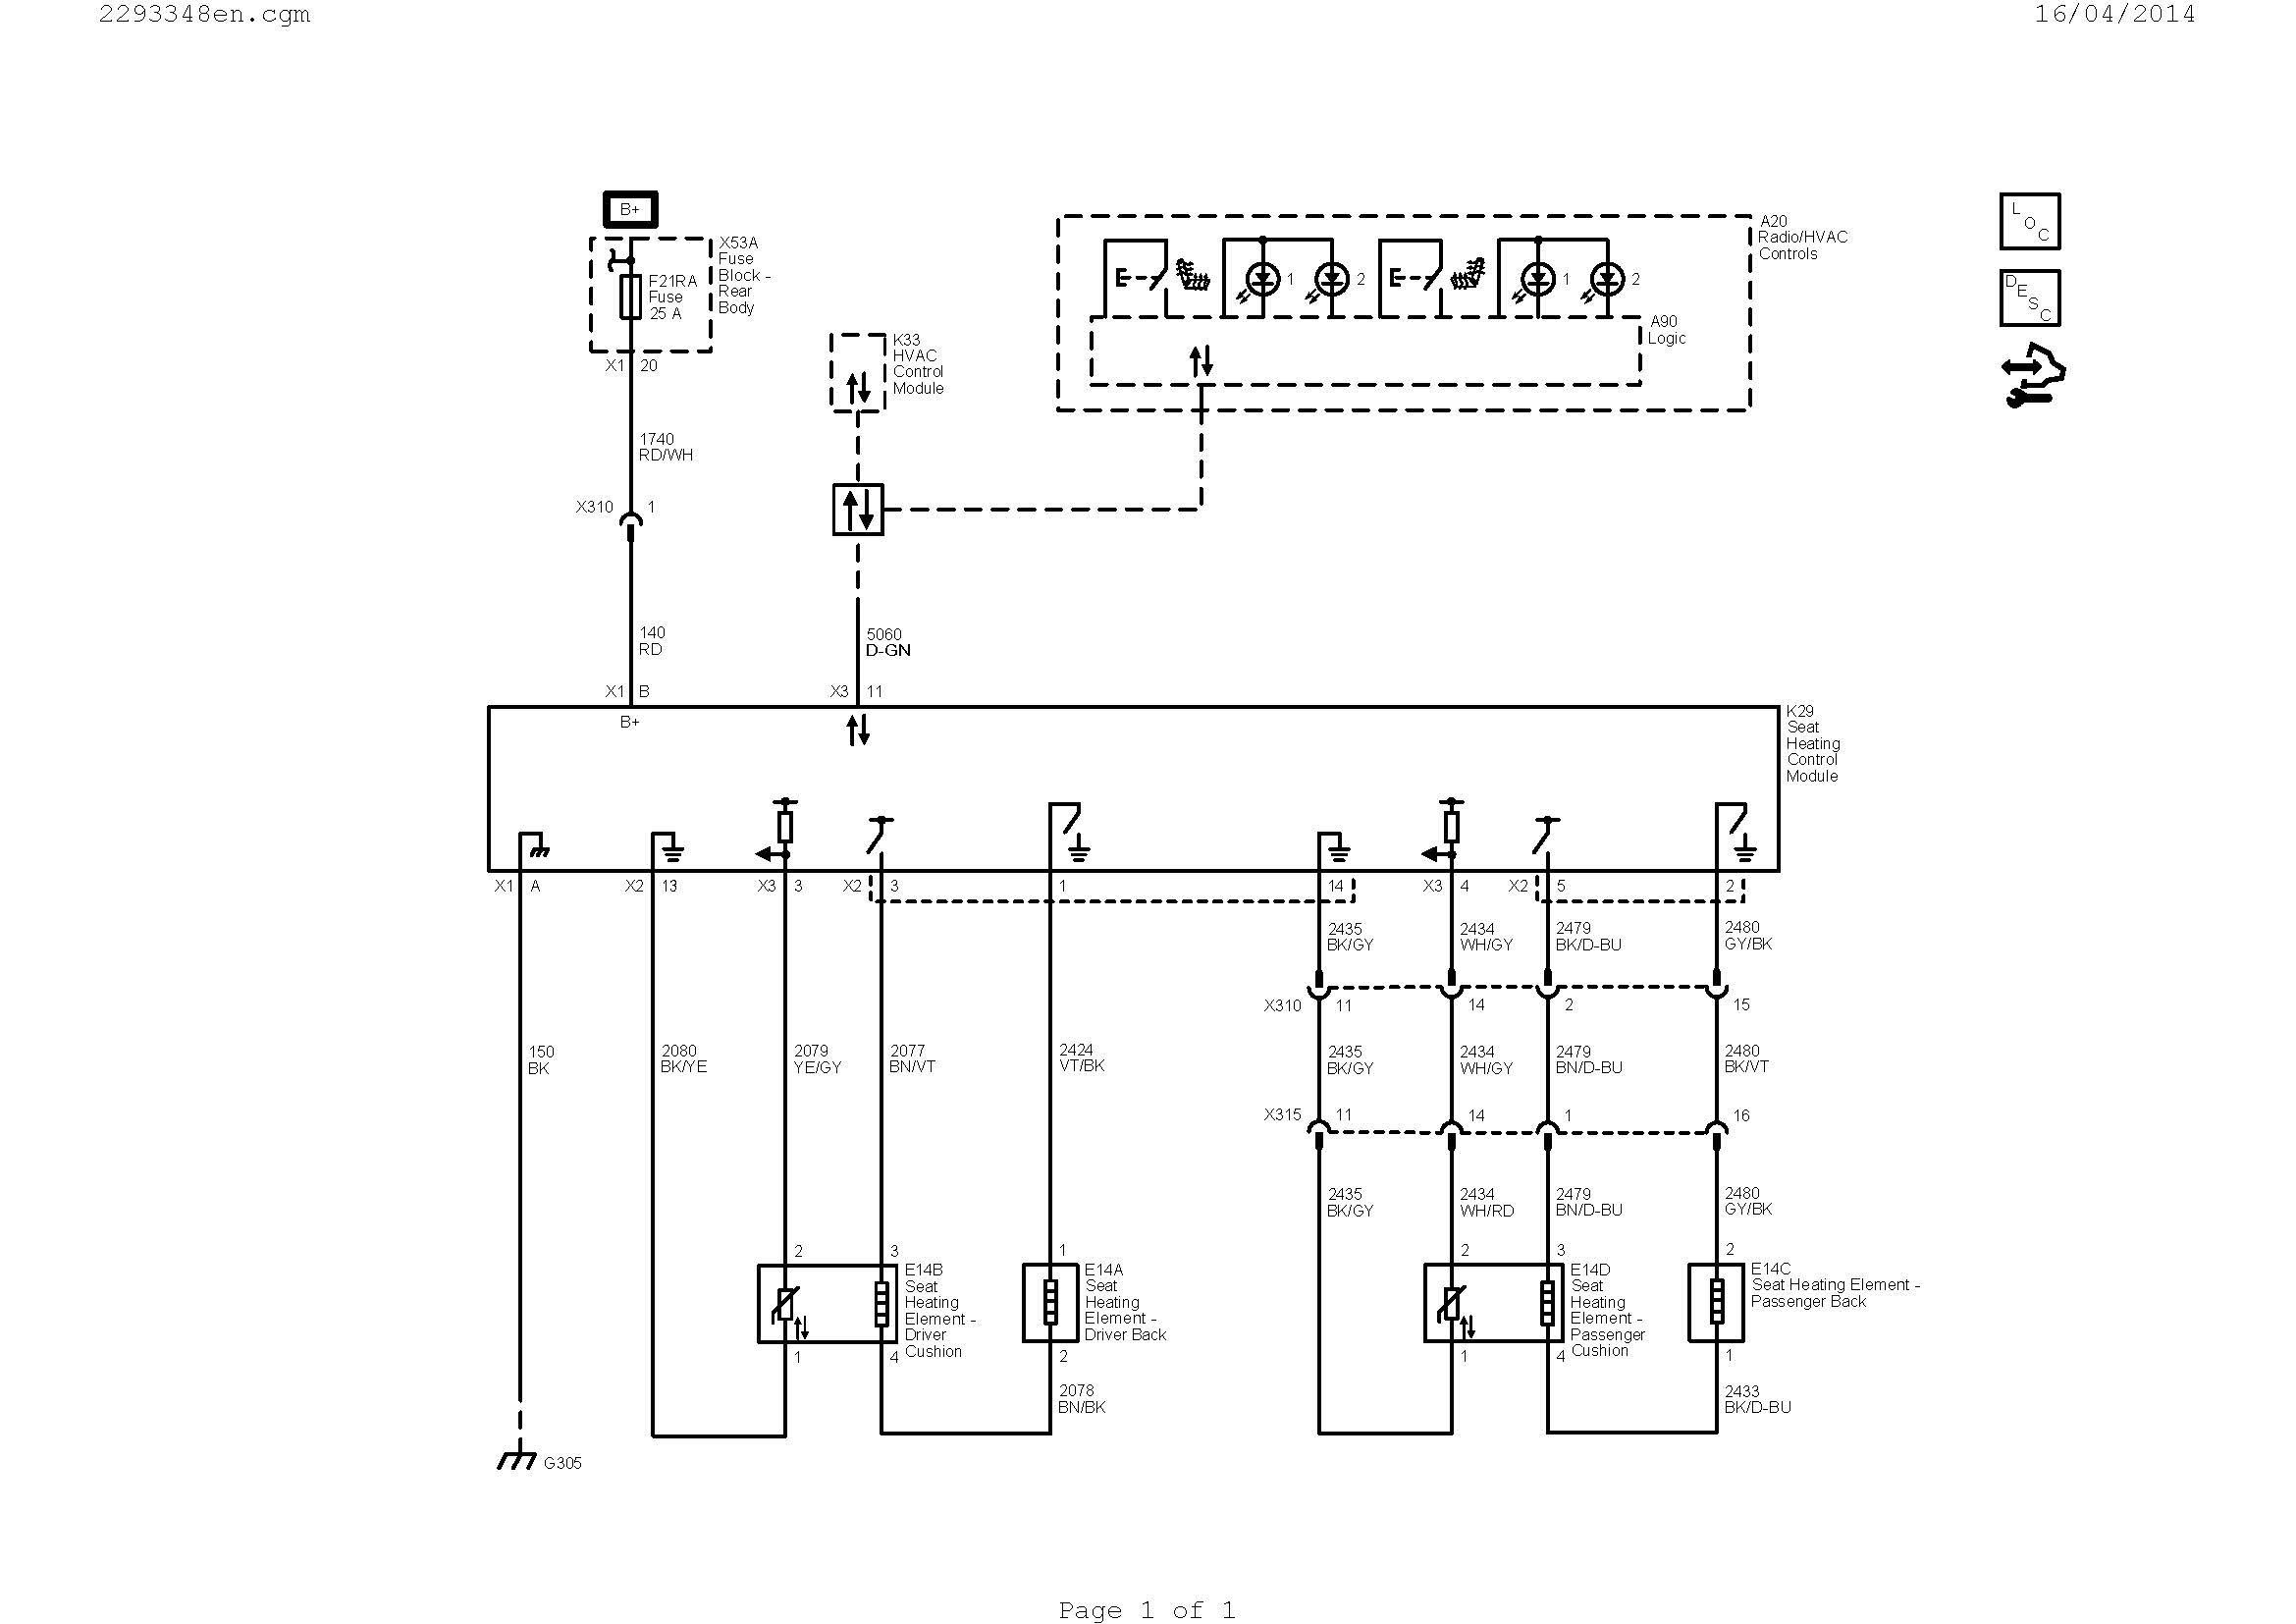 Wiring Diagram Car Valid Wiring Diagram Ac Valid Hvac Diagram Best Wiring Diagram for Amplifier